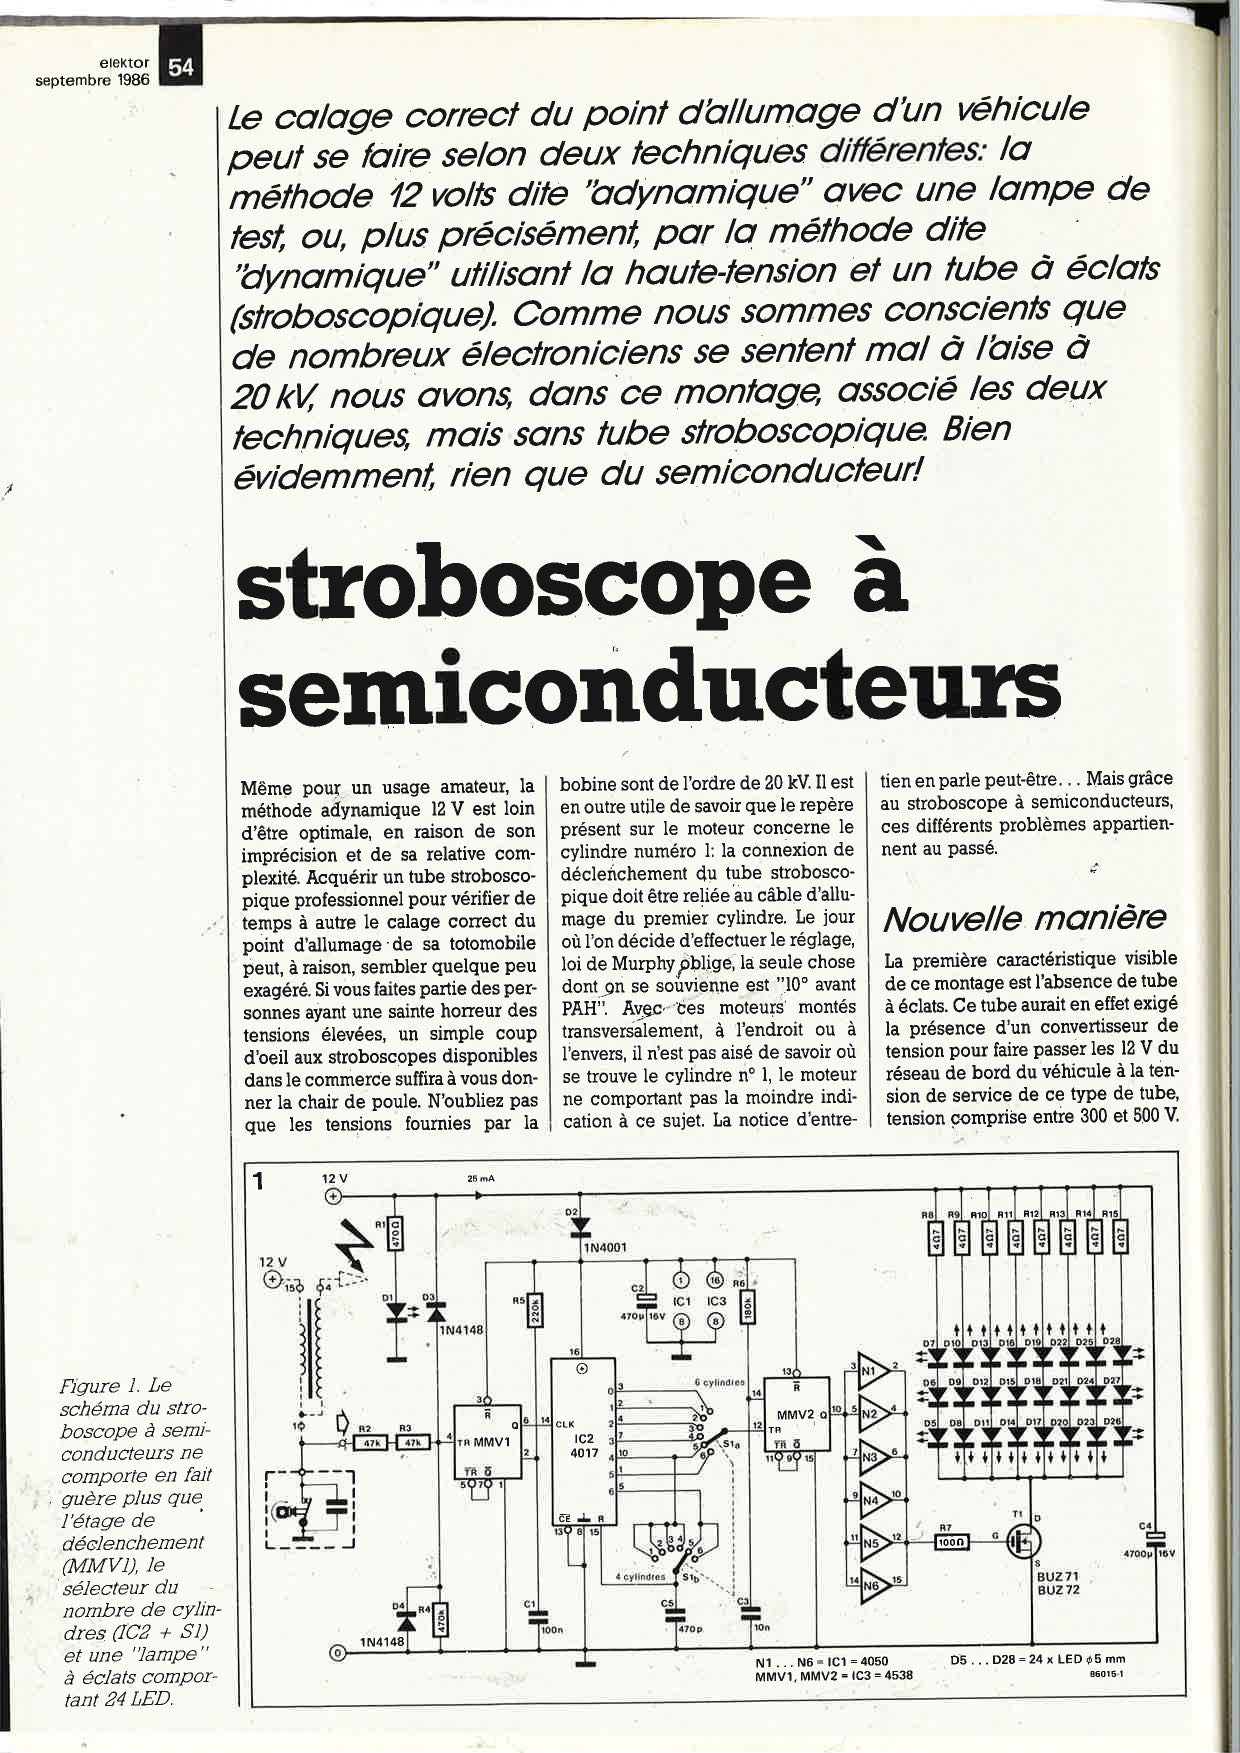 Stroboscope à semiconducteurs